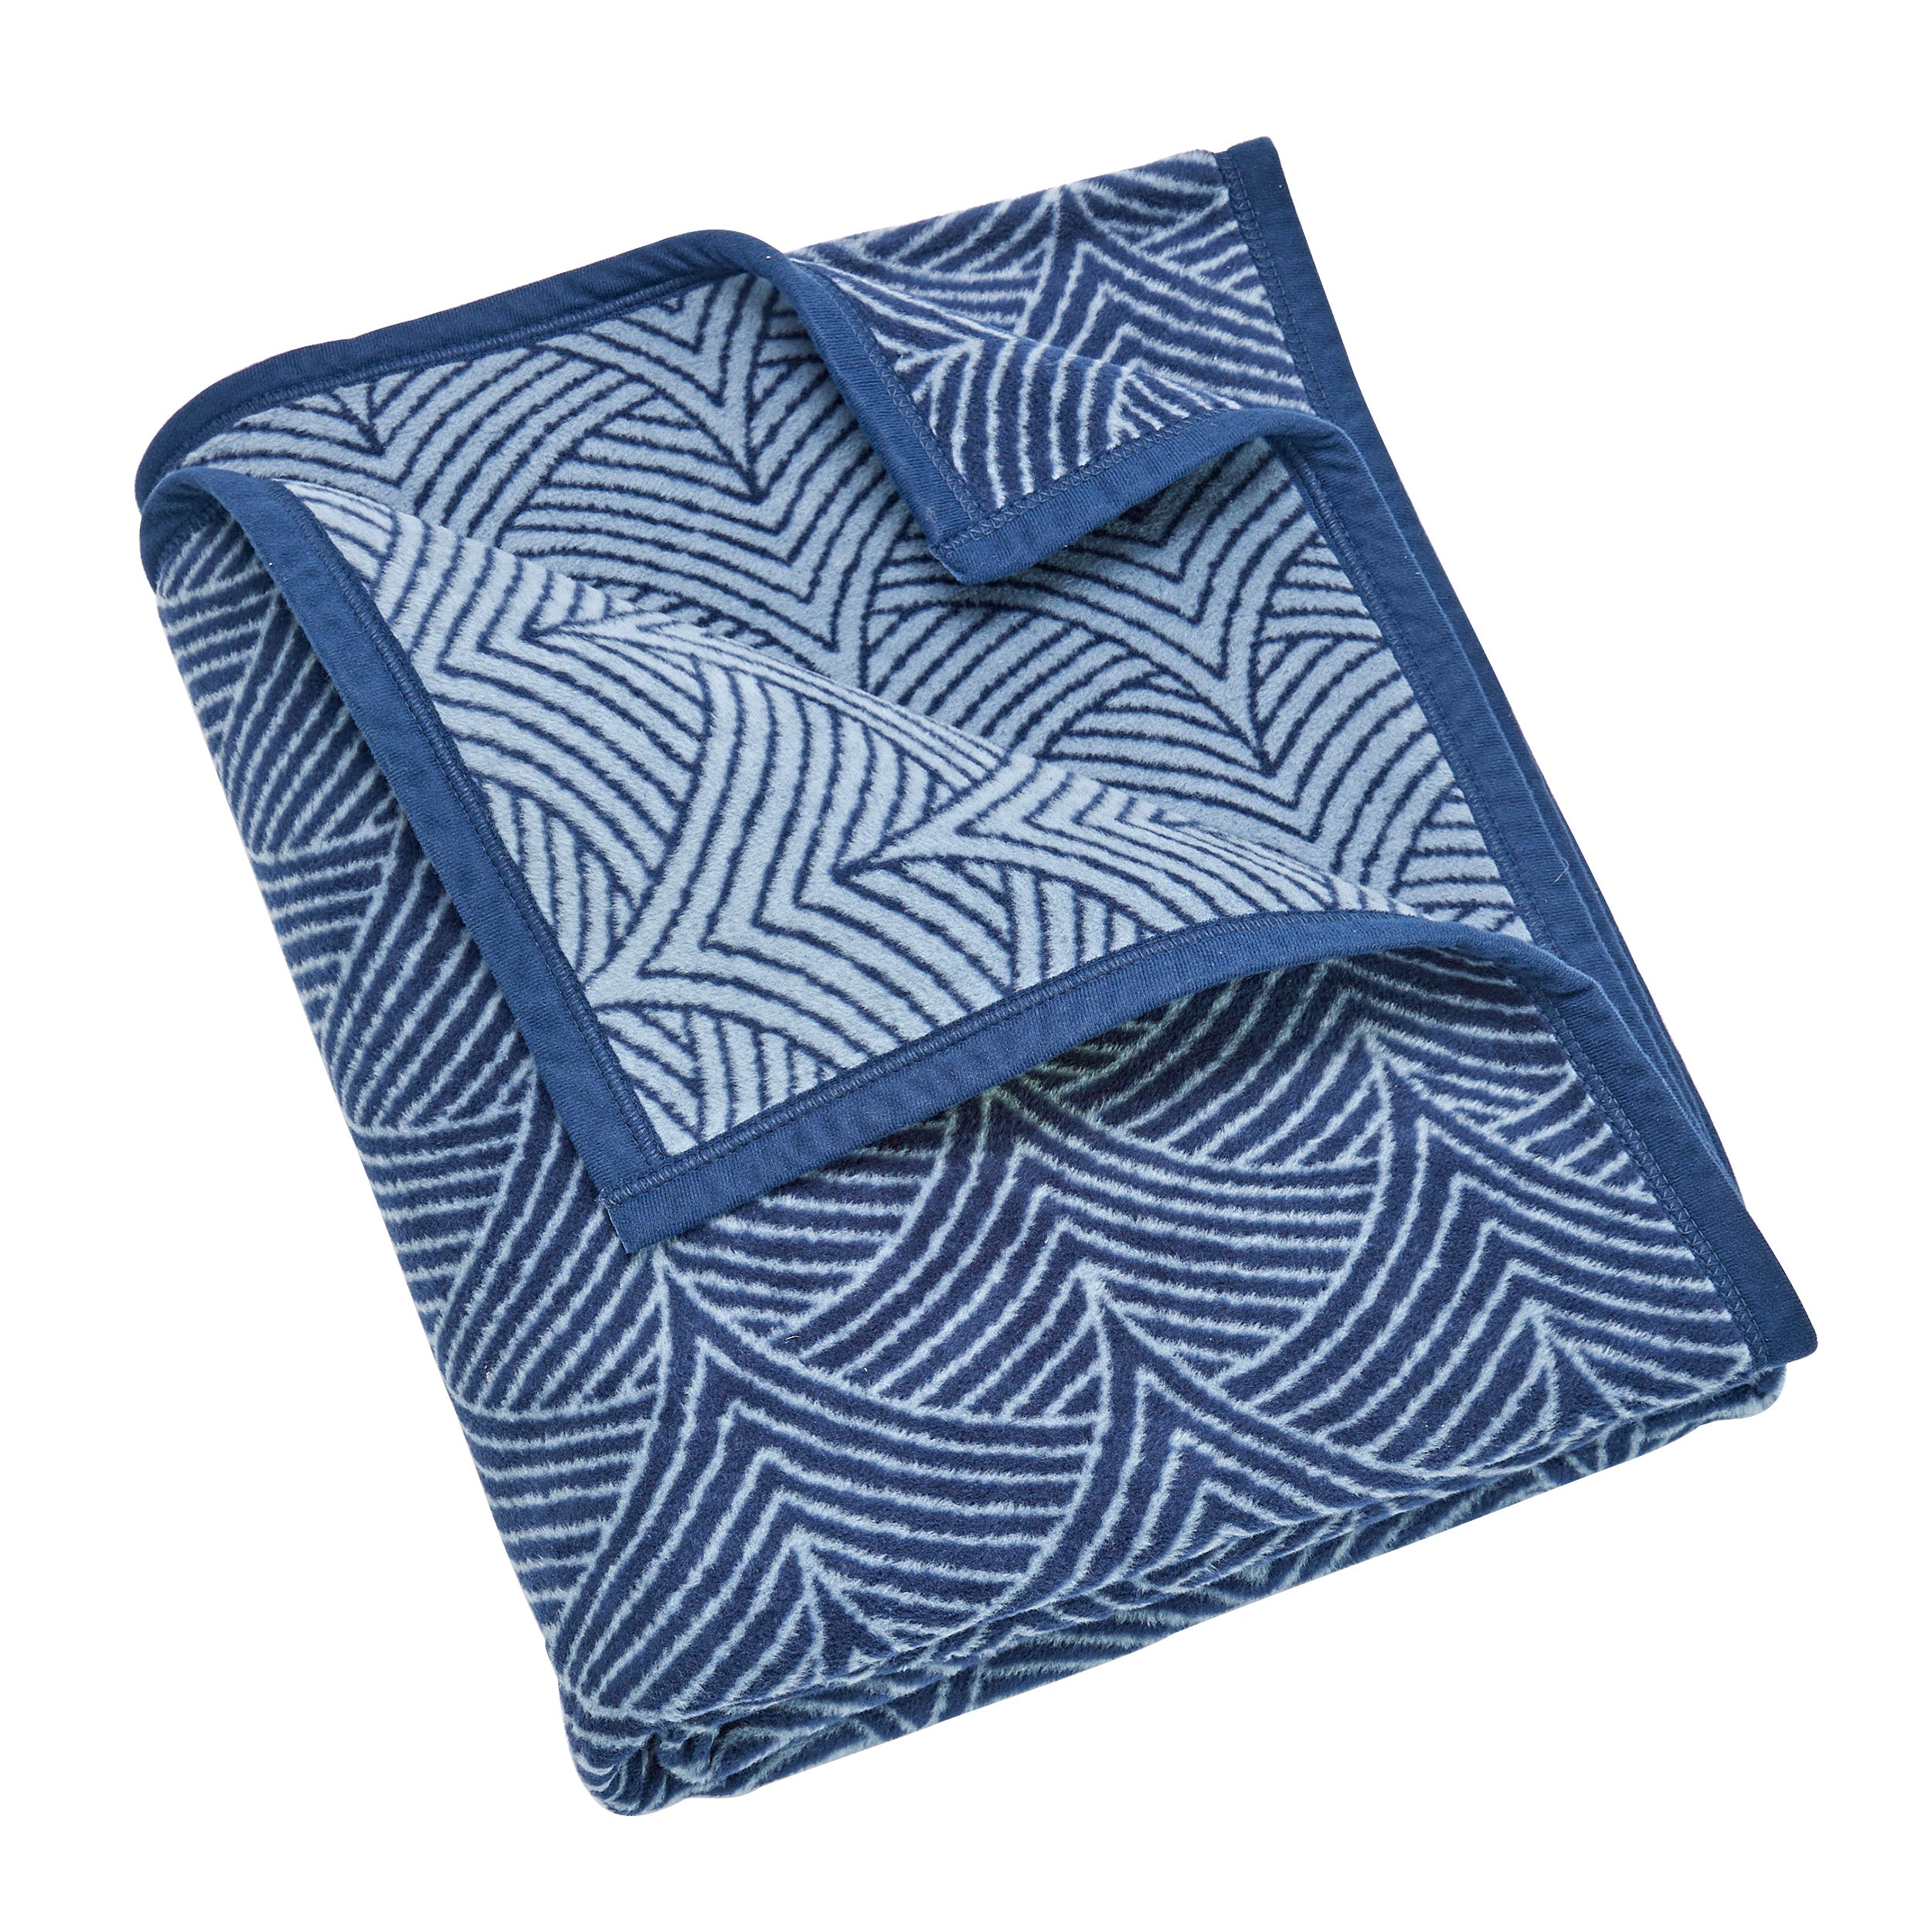 Wave Blanket by ChappyWrap